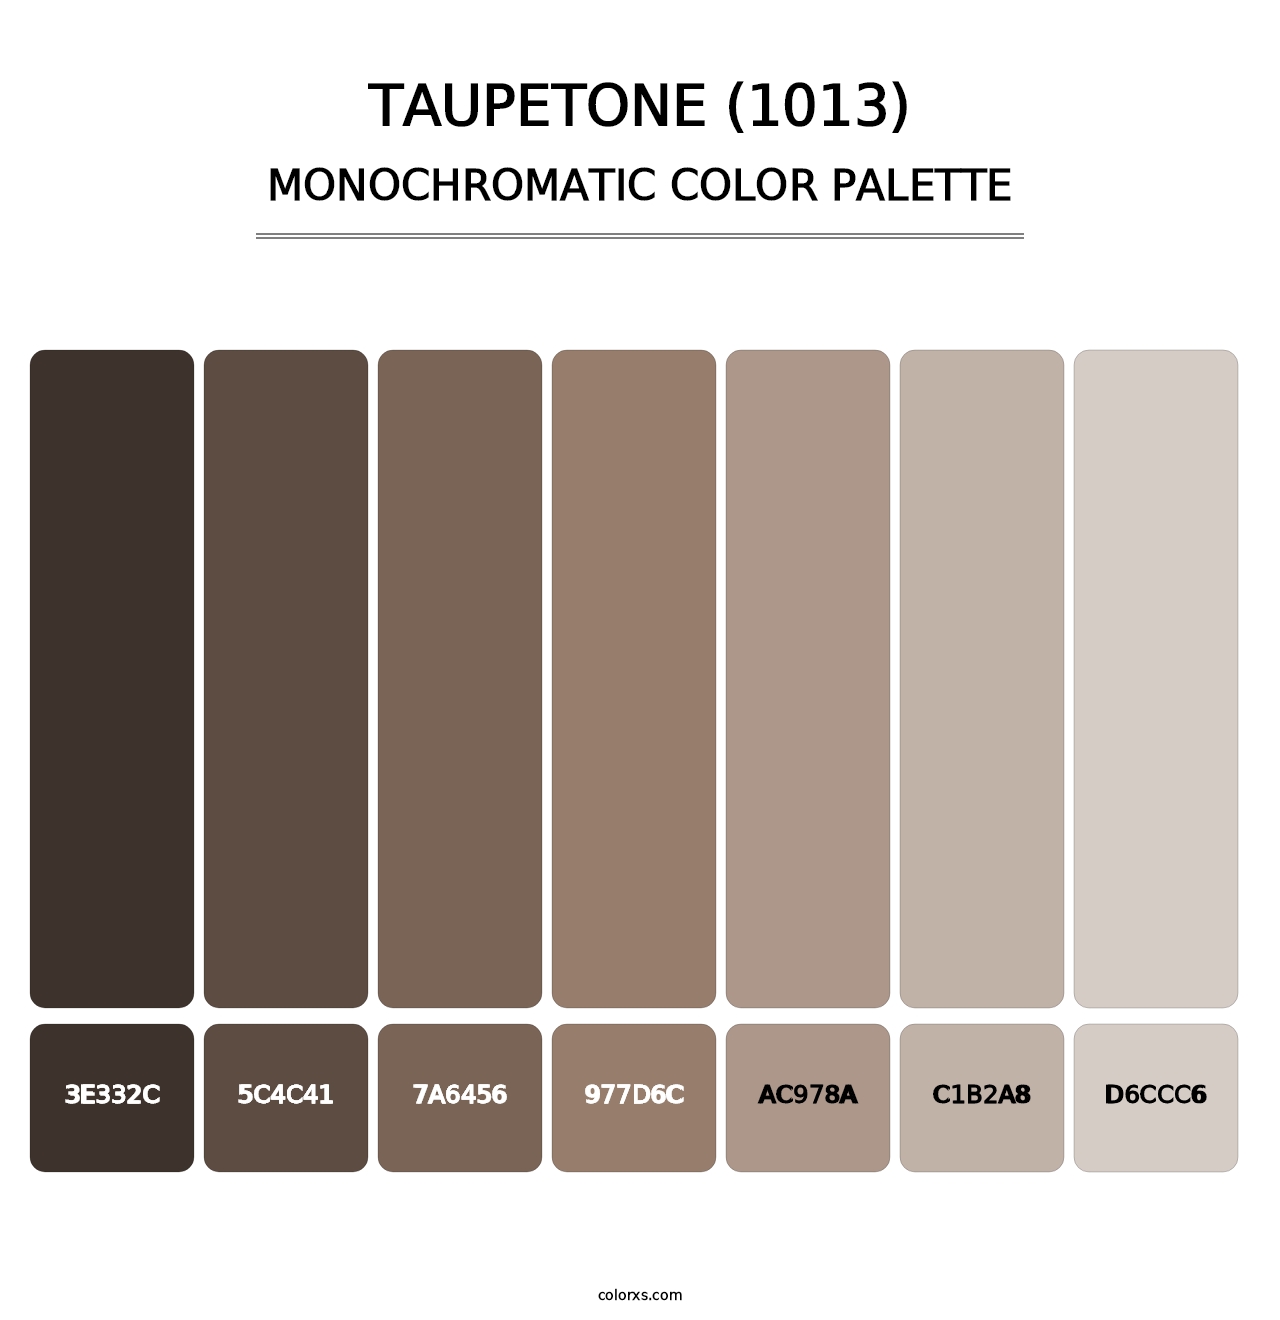 Taupetone (1013) - Monochromatic Color Palette